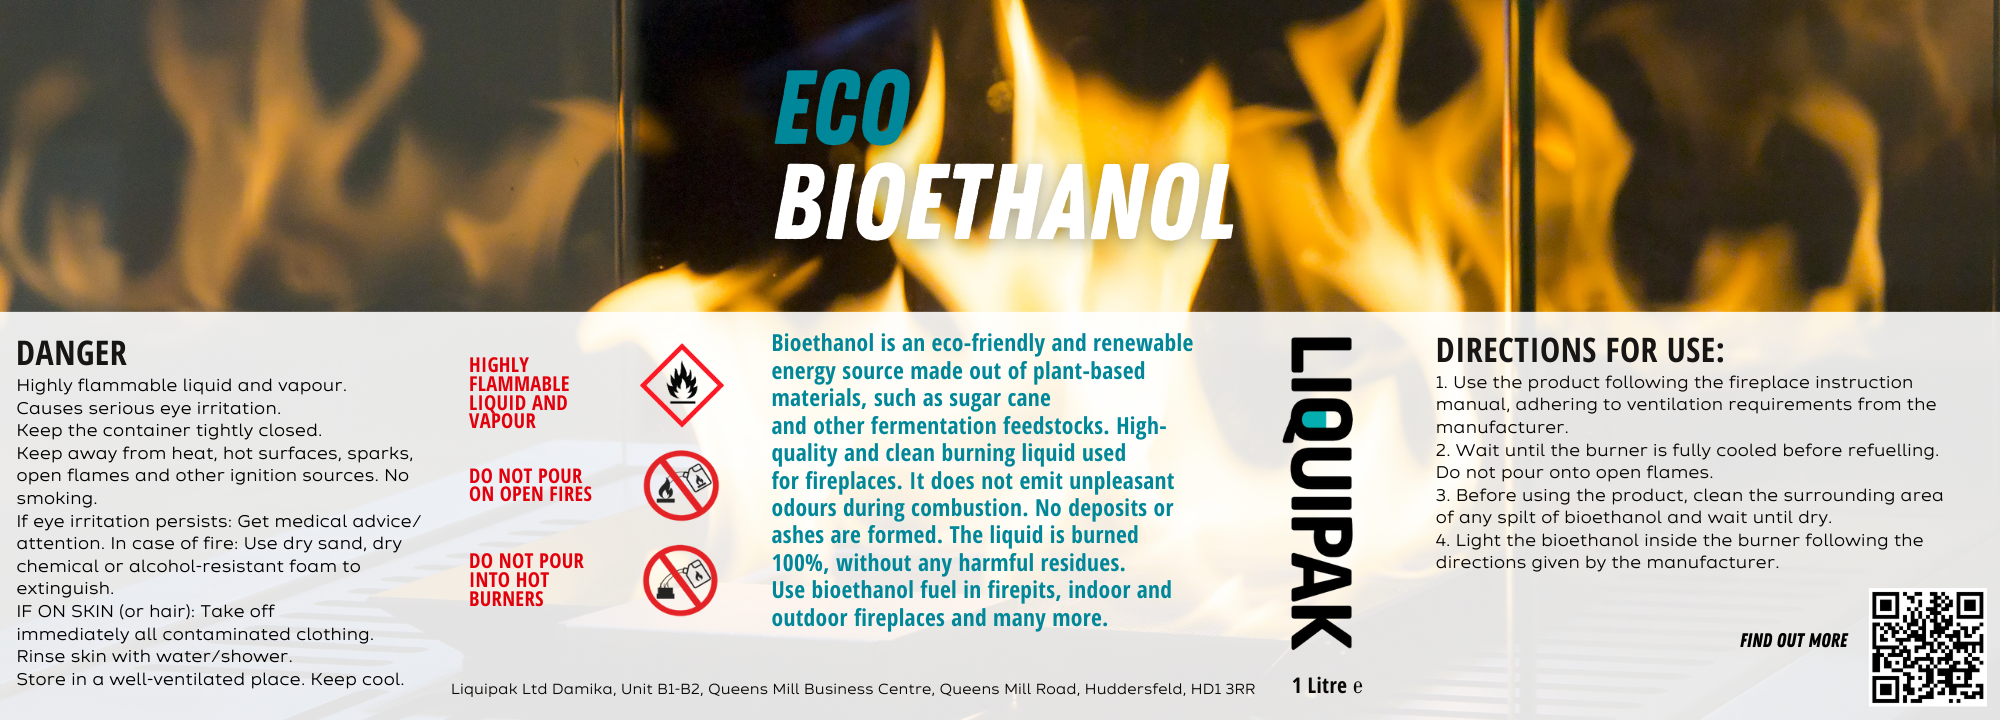 Liquipak Bioethanol Fuel